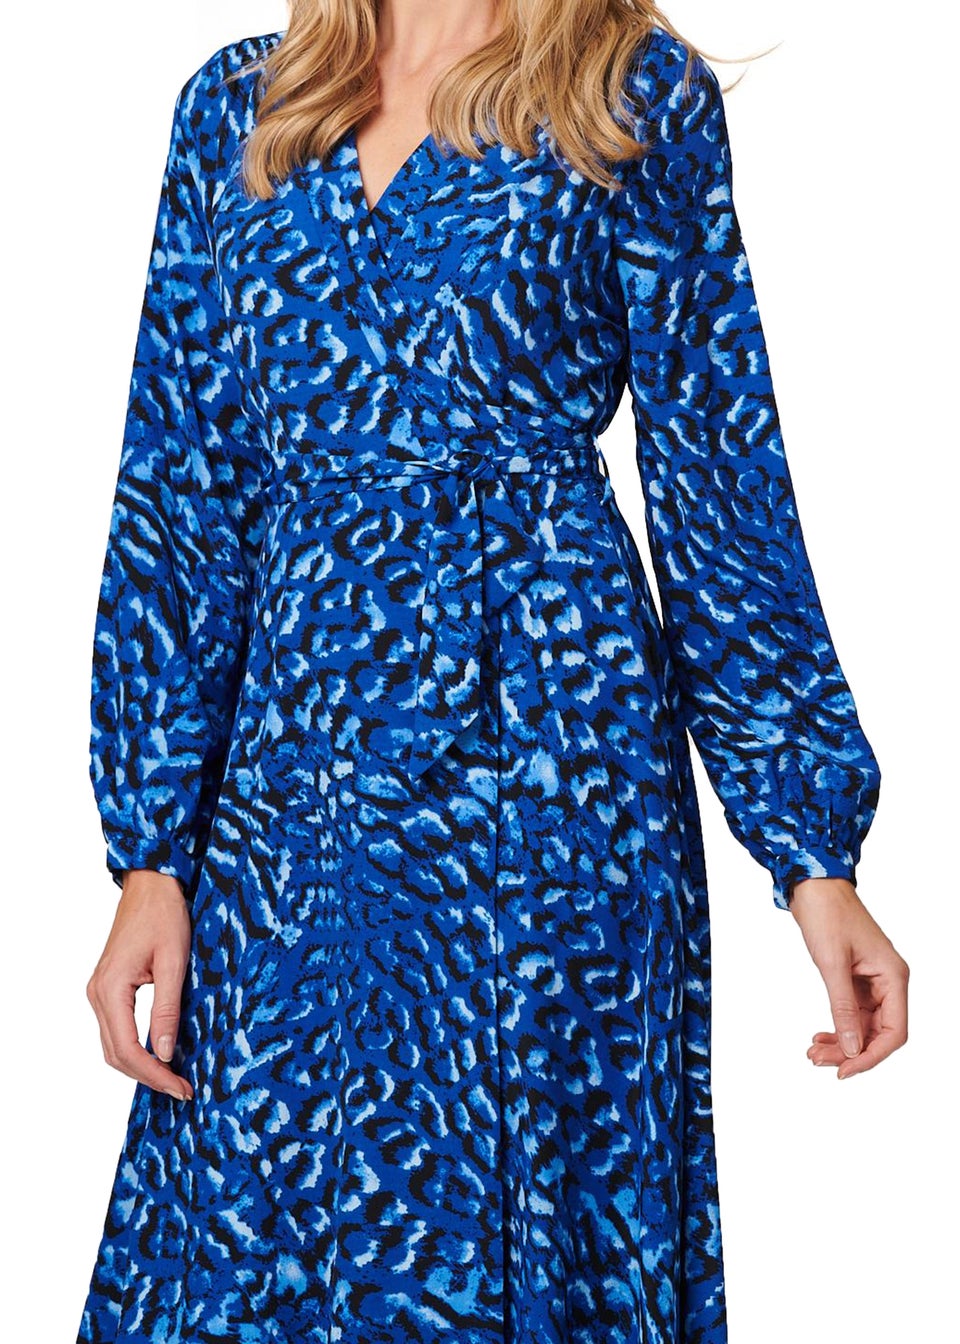 Izabel London Blue Leopard Print Hanky Hem Dress